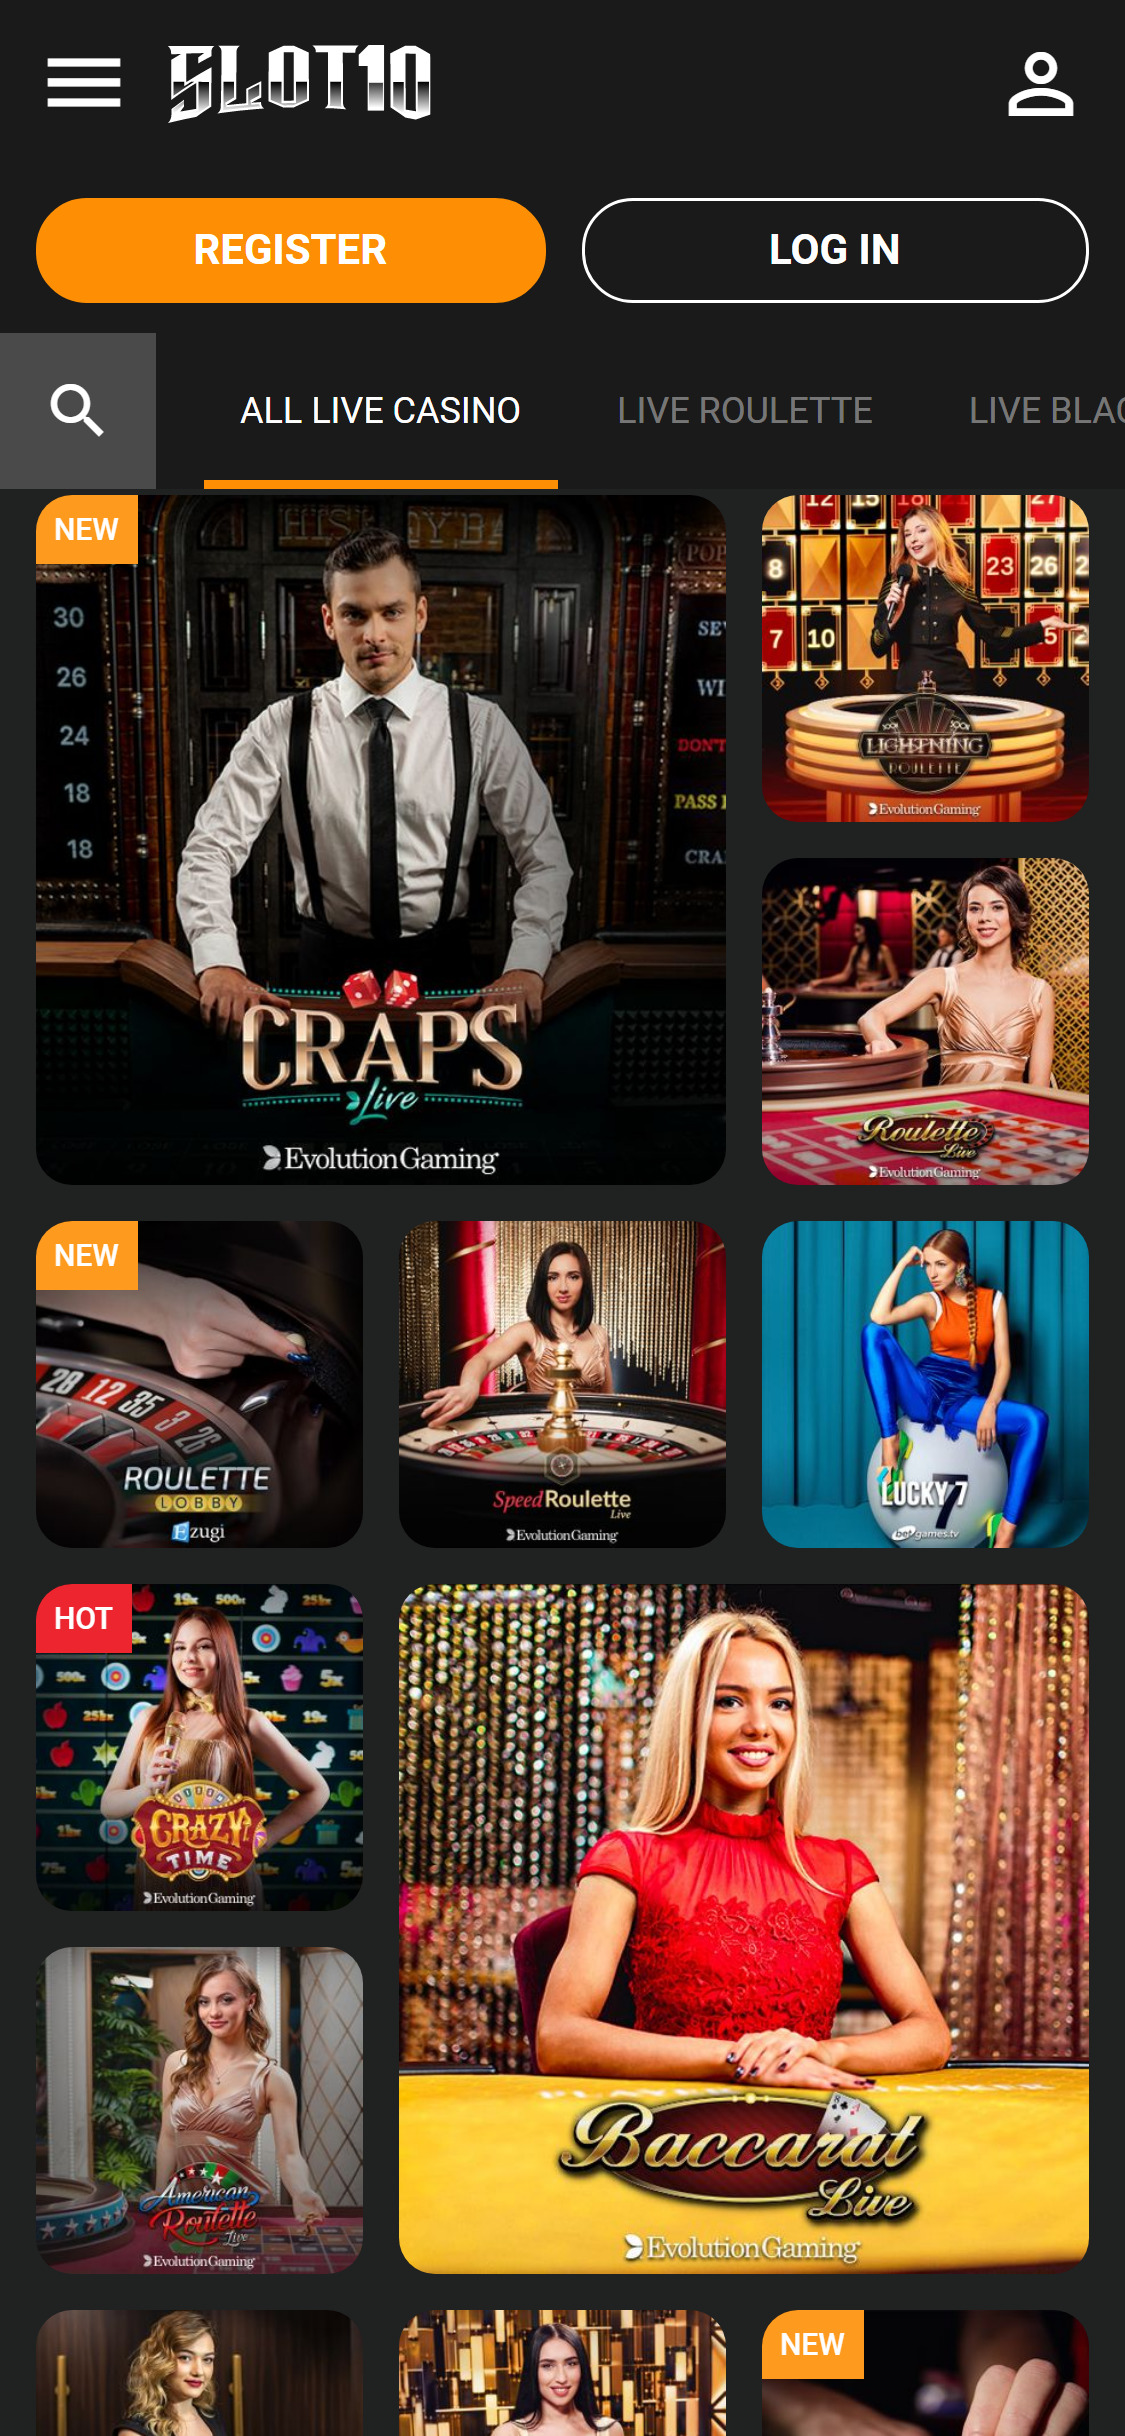 Slot 10 Casino Mobile Live Dealer Games Review